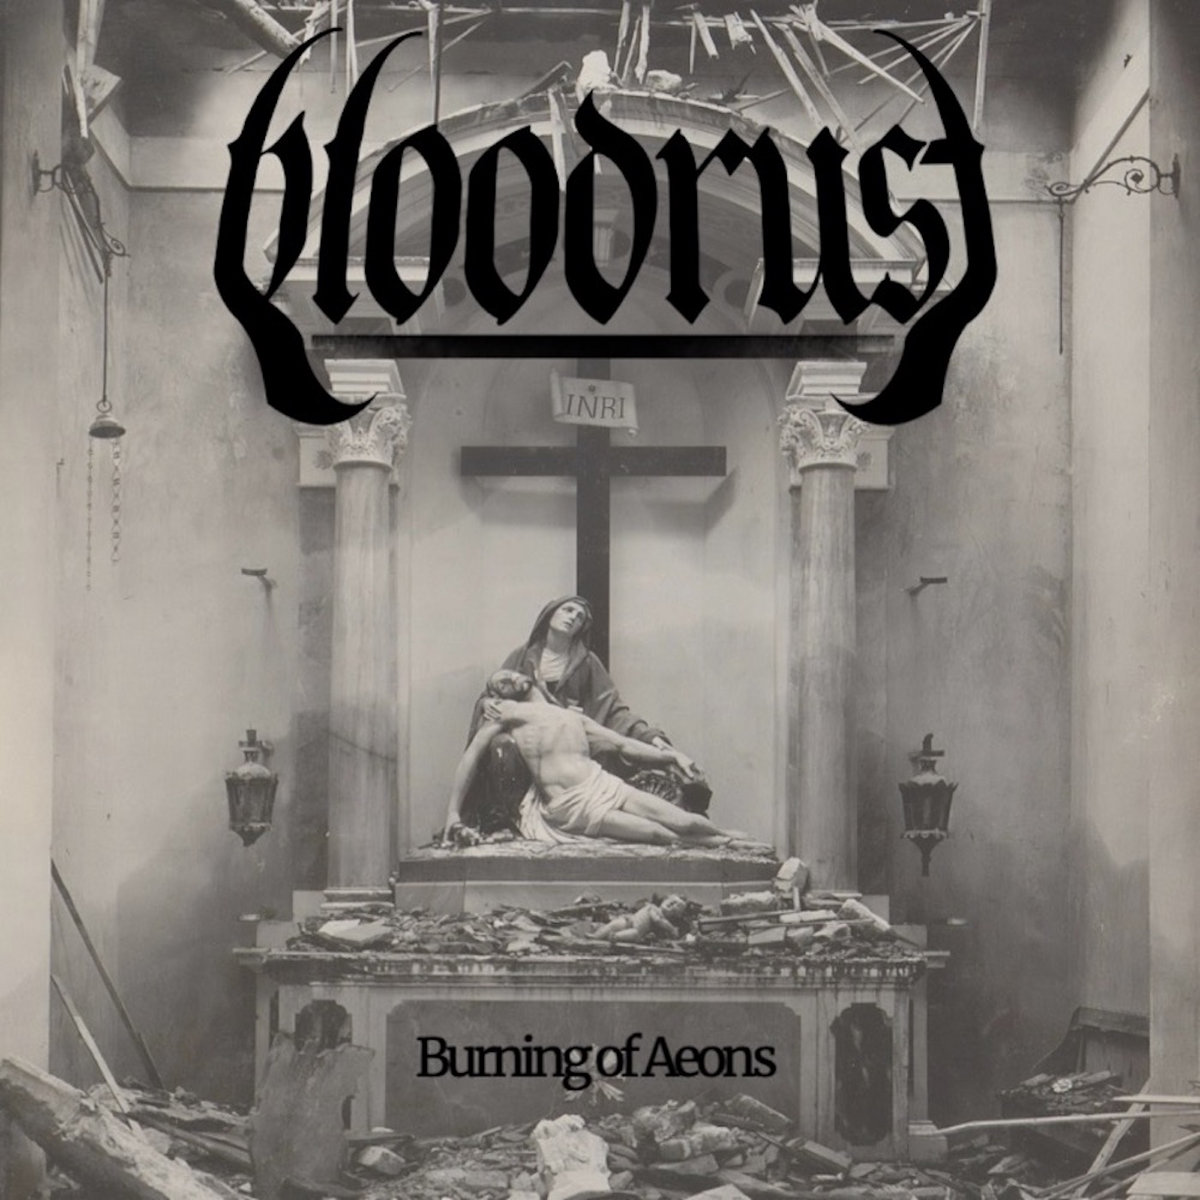 BLOODRUST - Burning of Aeons cover 